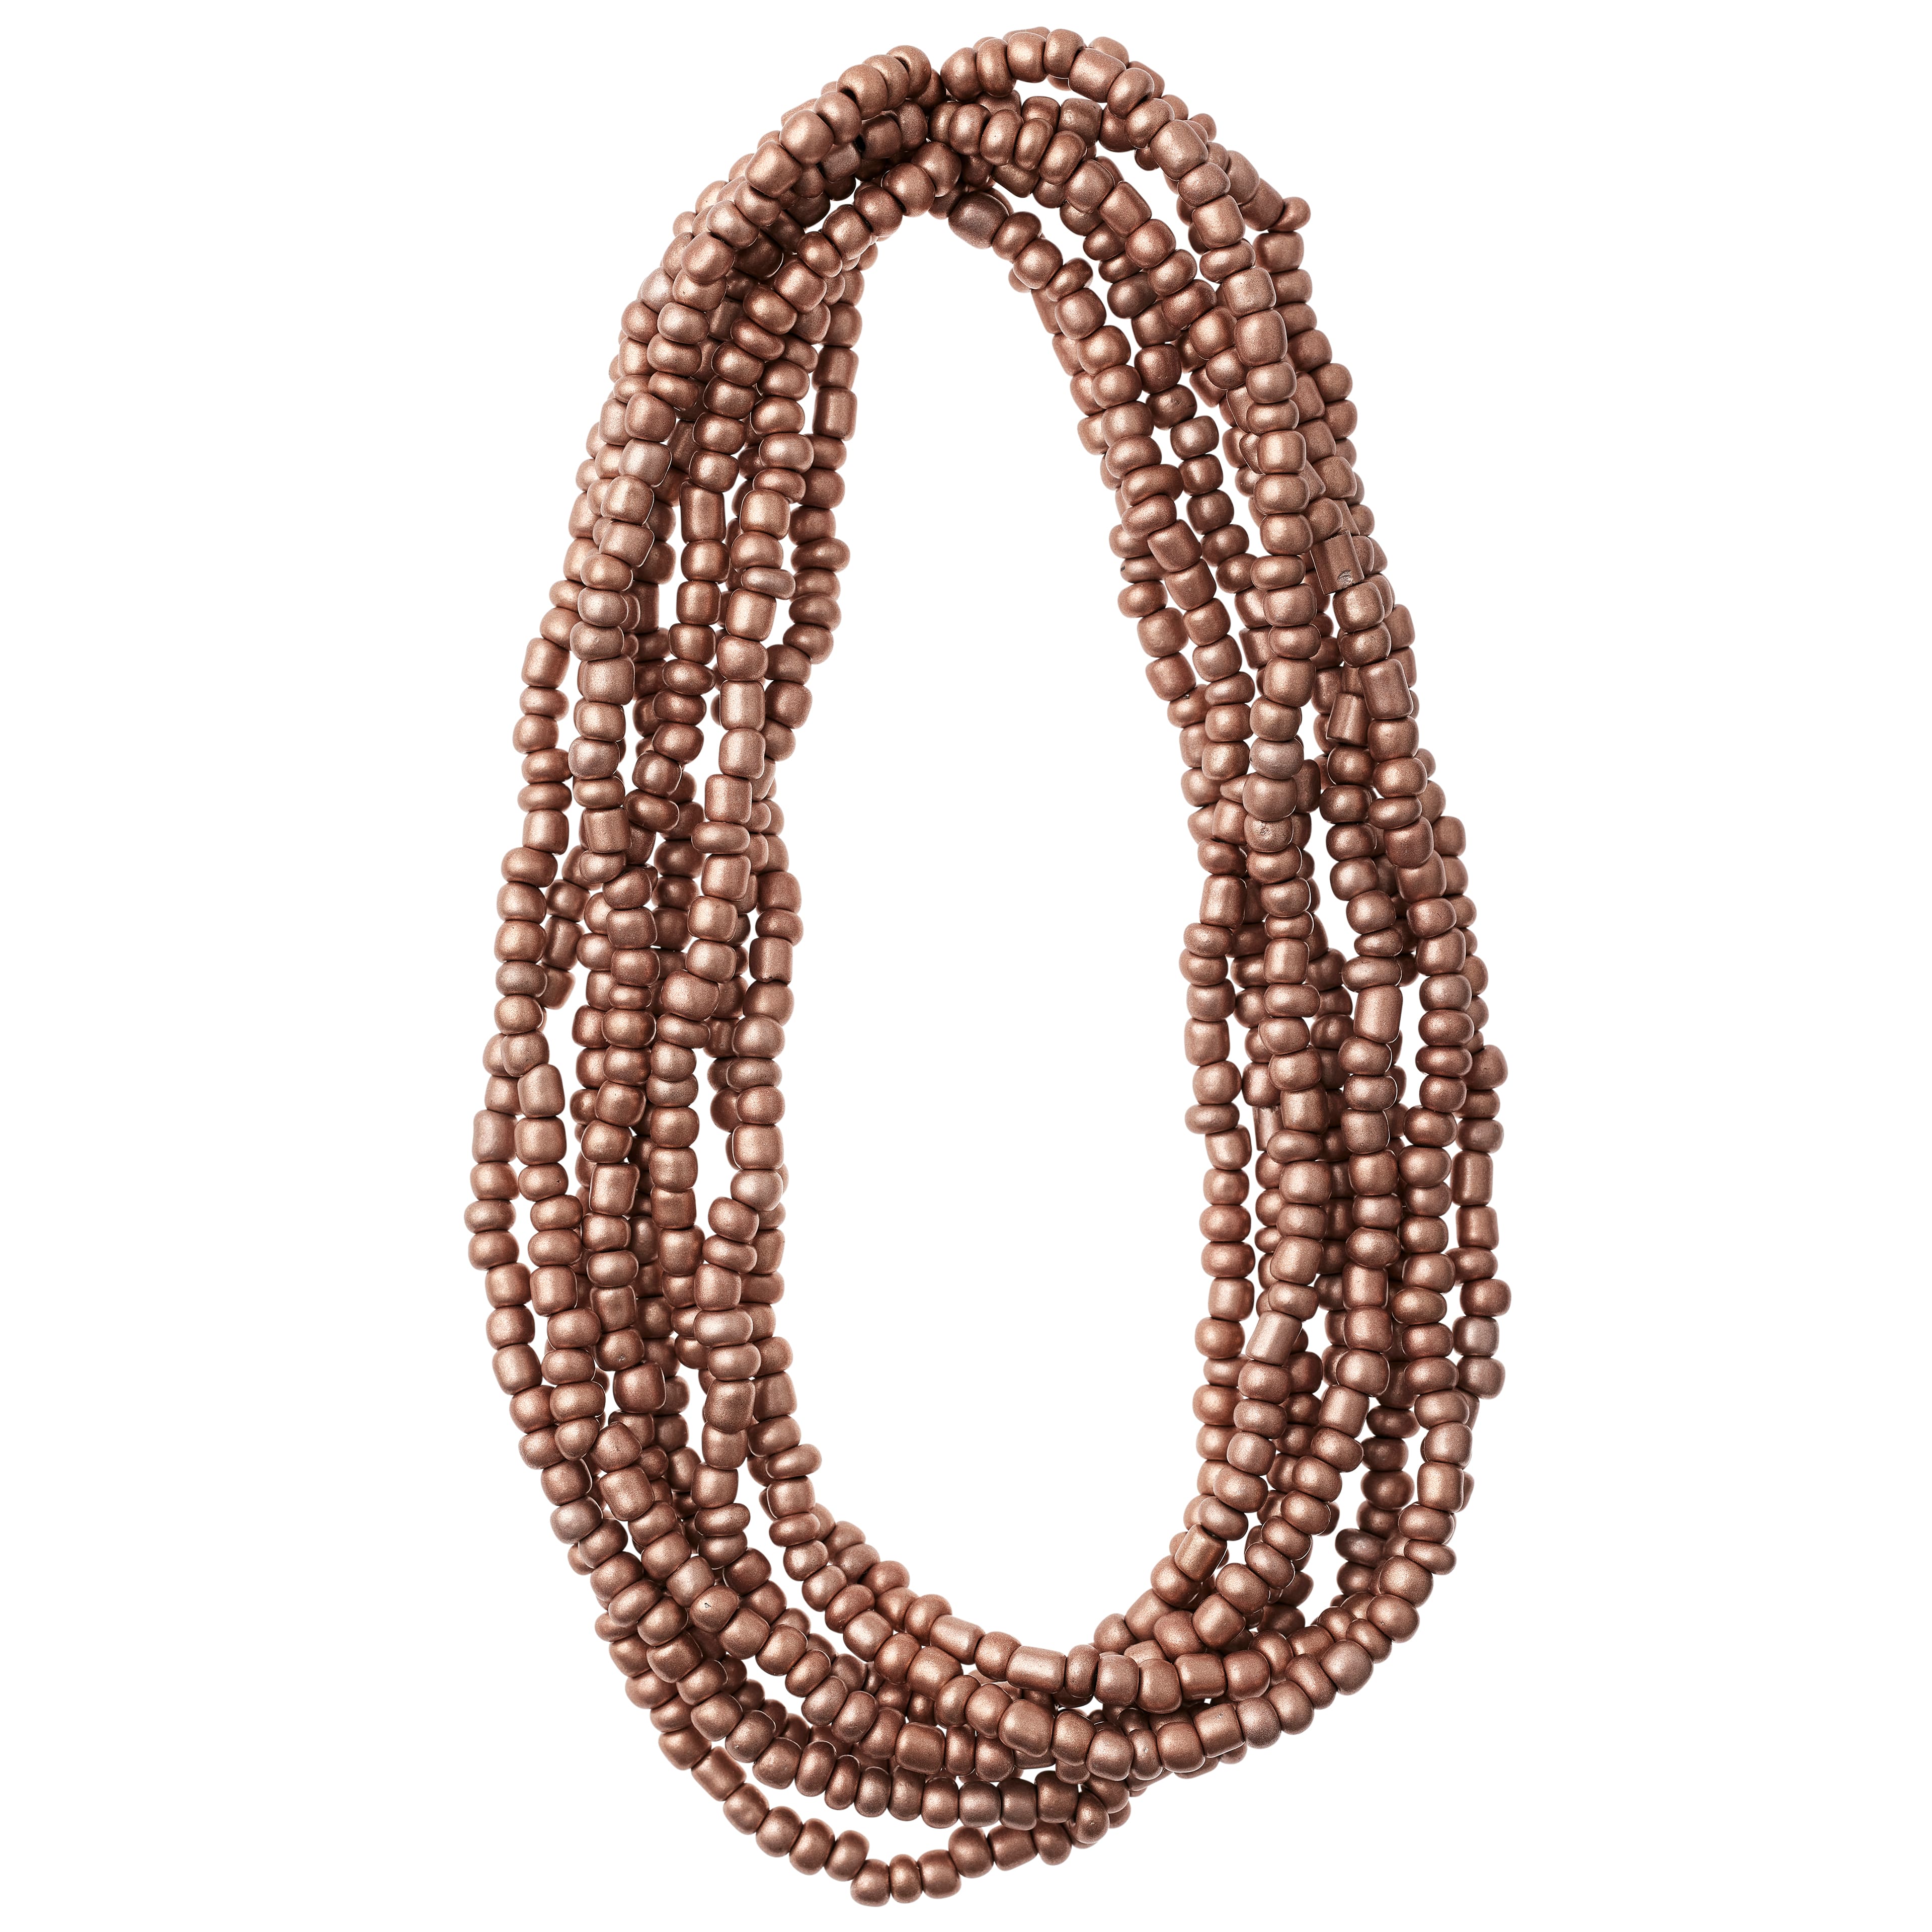 Bead Landing™ Assorted Jewelry Wire 